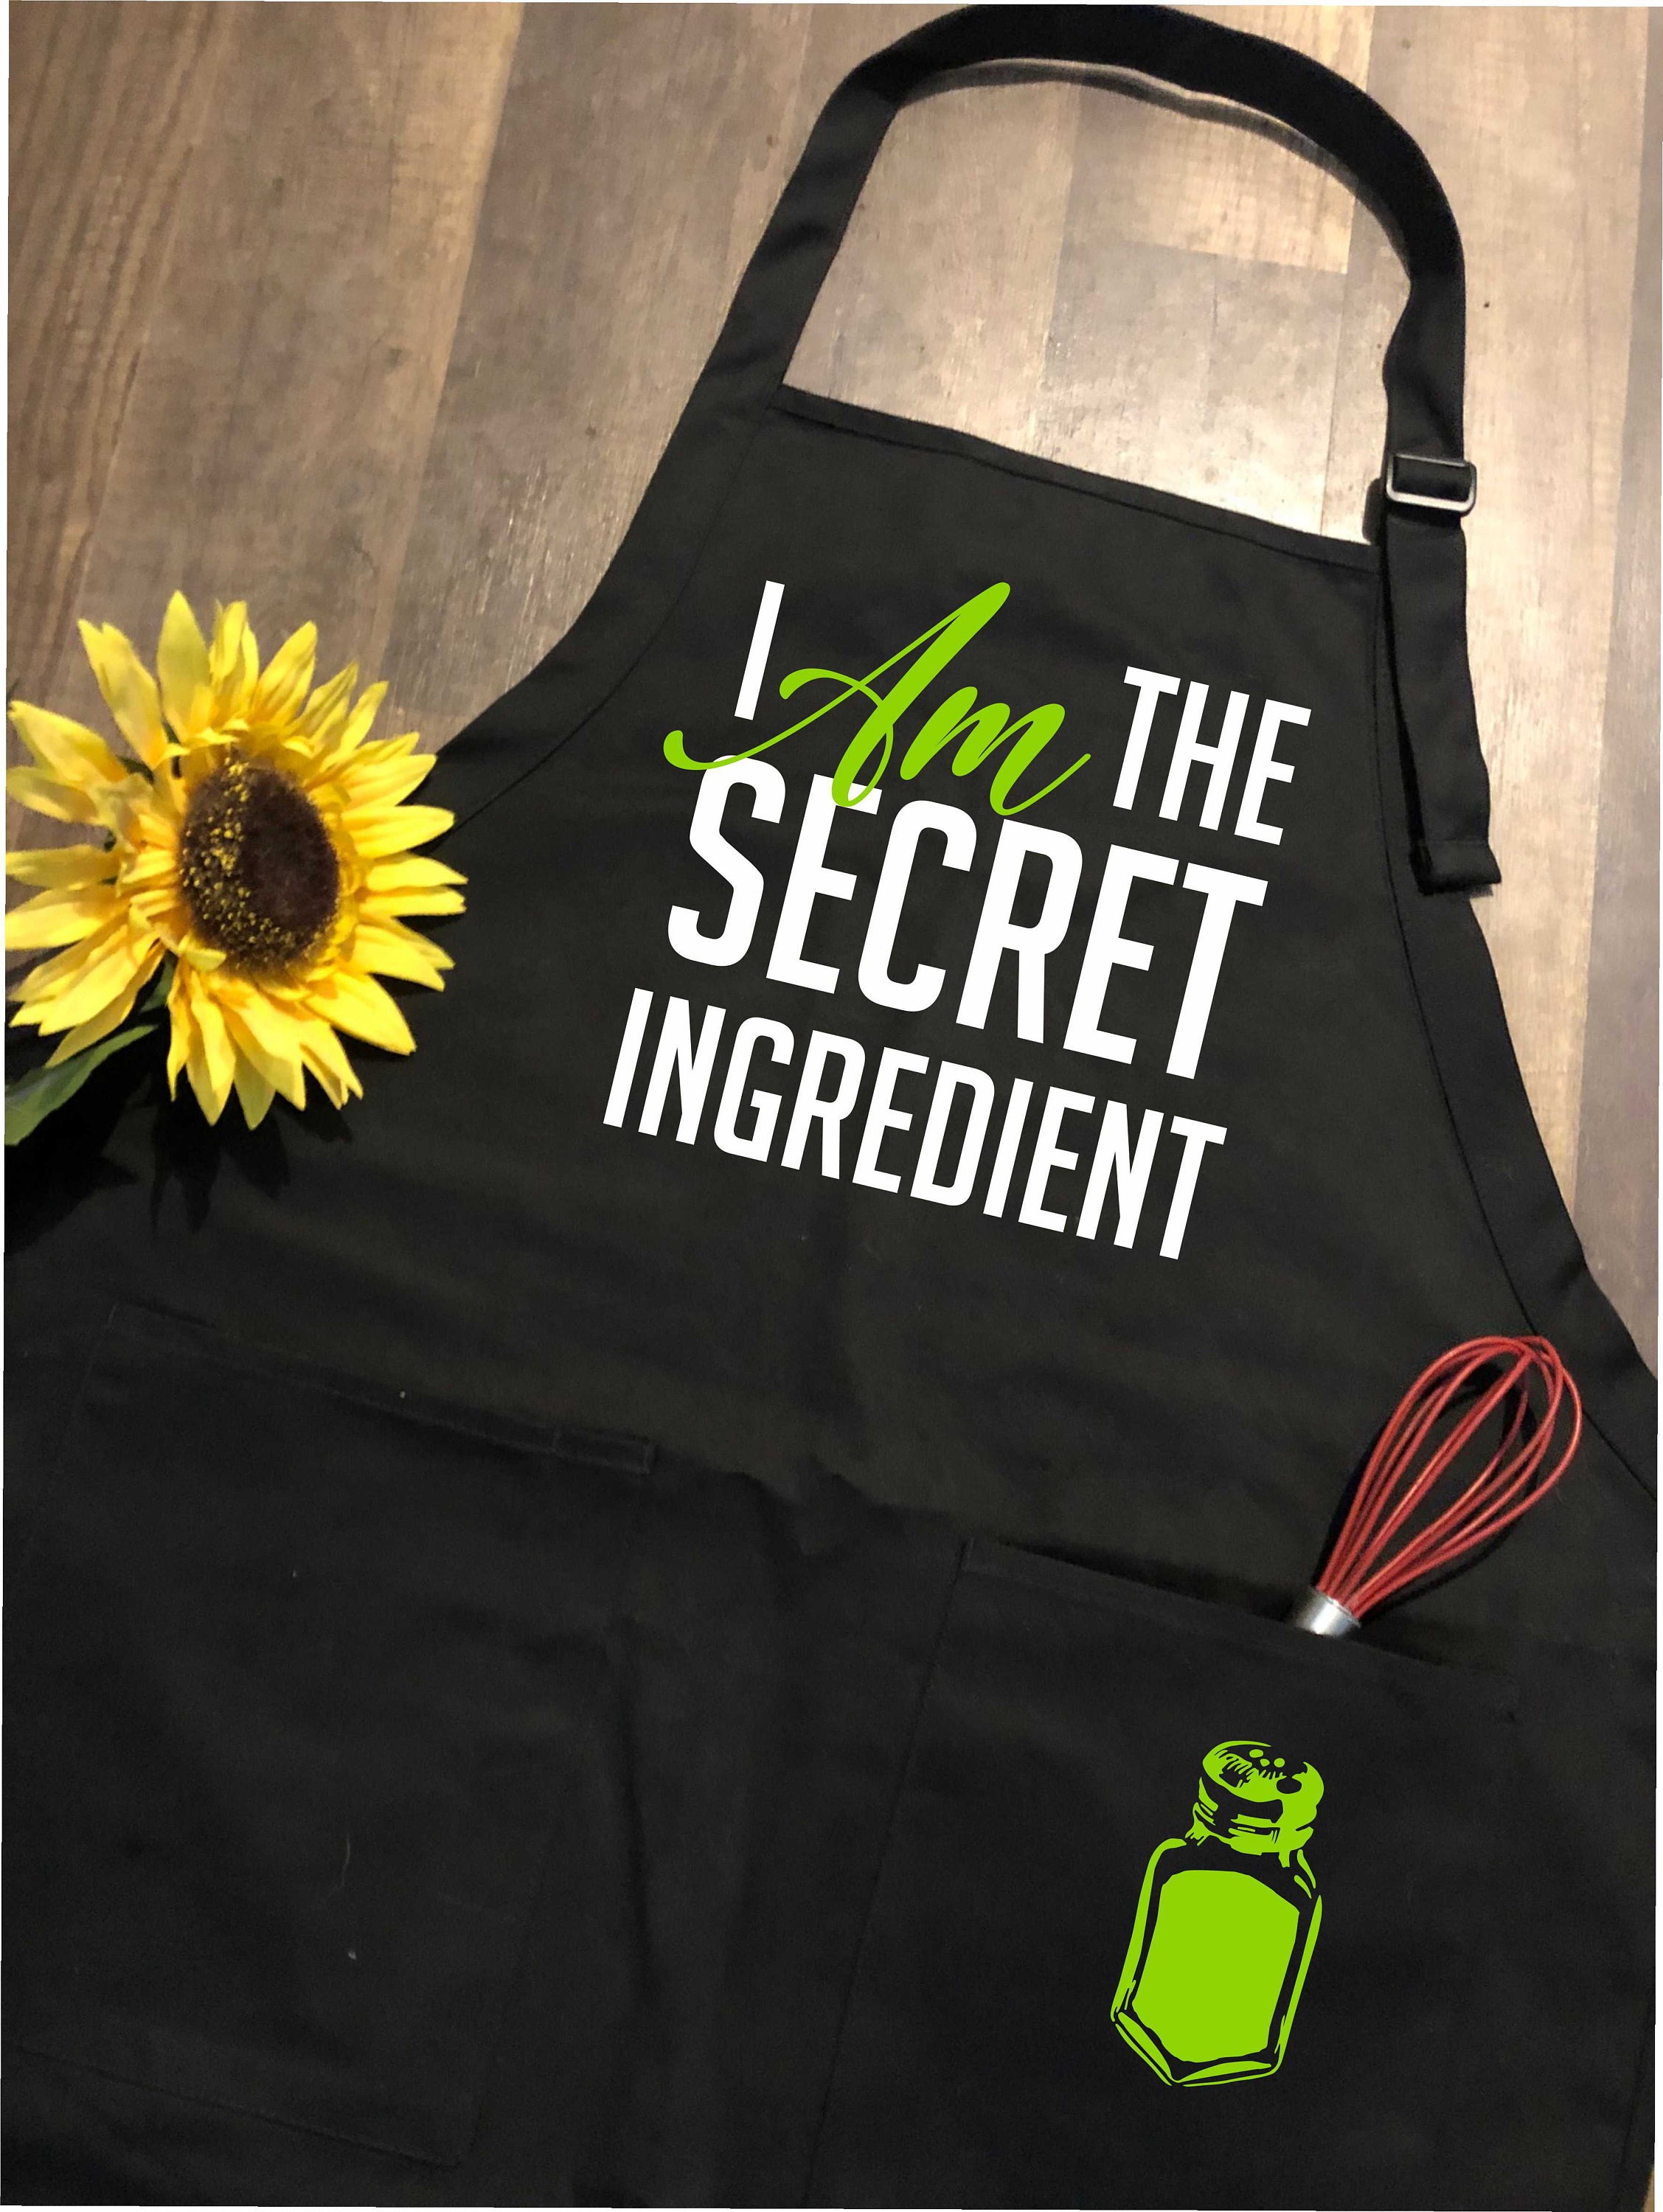 Funny Kitchen Apron Bitch I Am The Secret Ingredient – Alaskablue  Creations